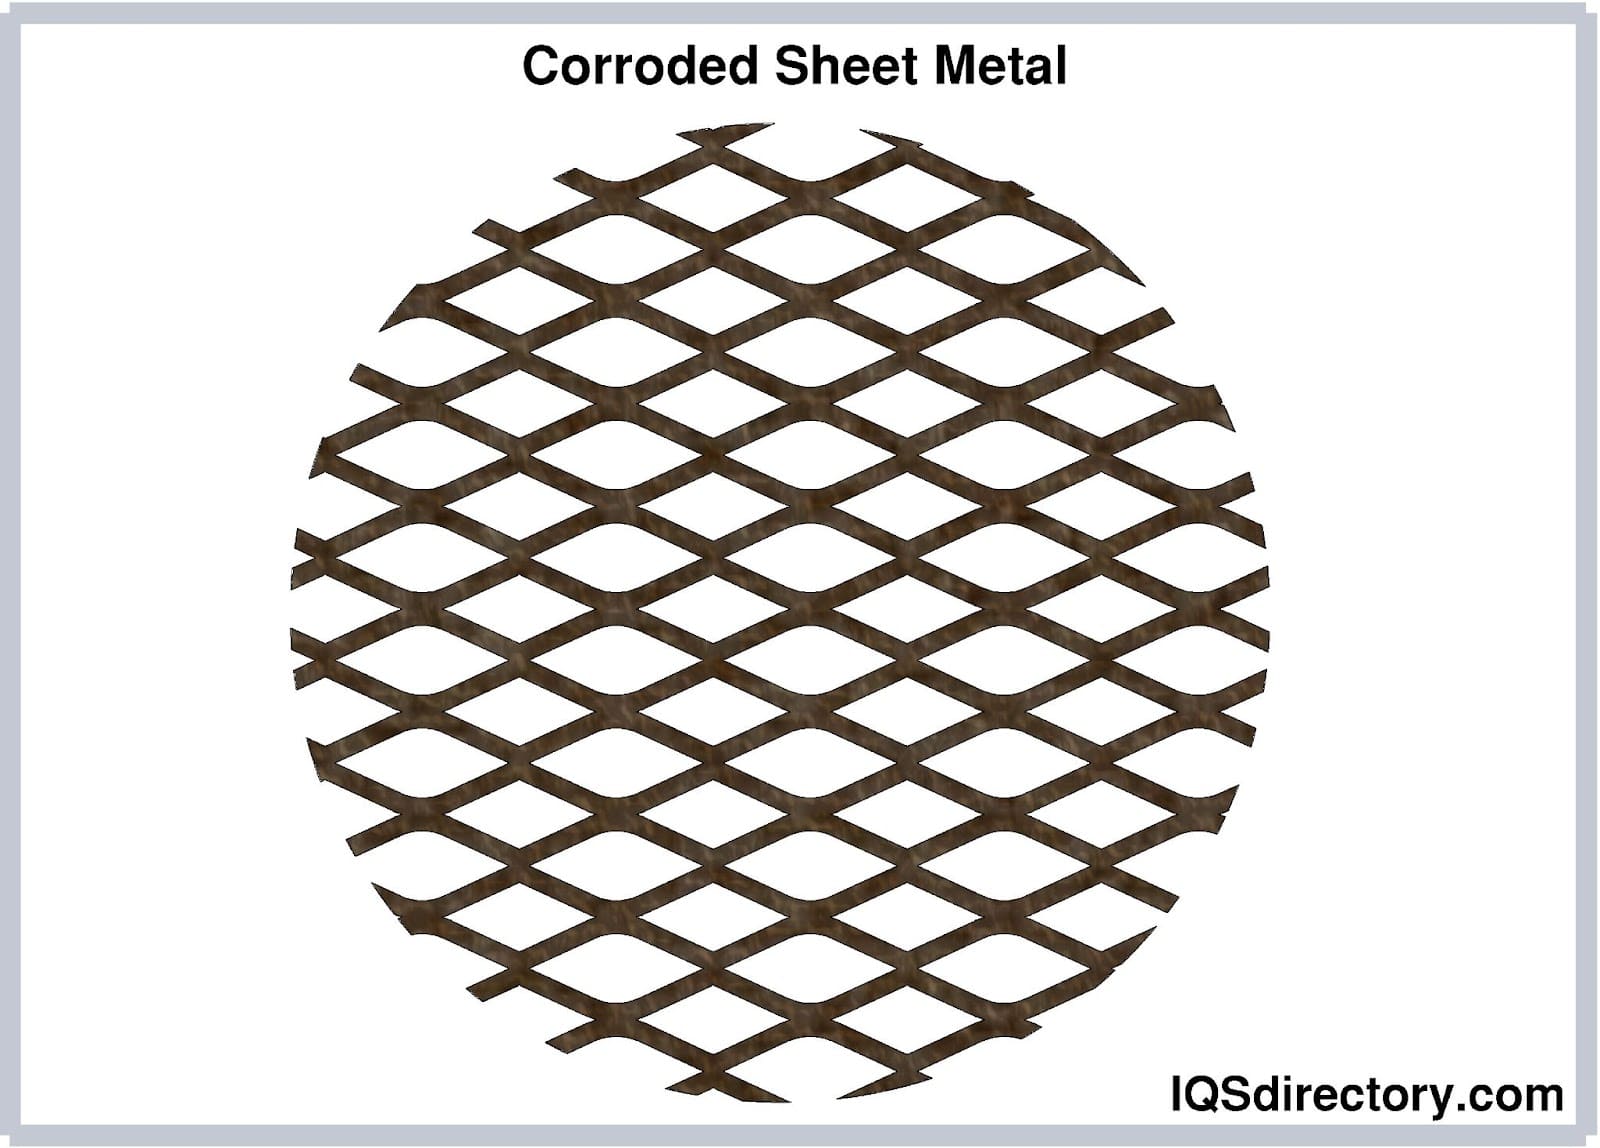 Corroded Sheet Metal